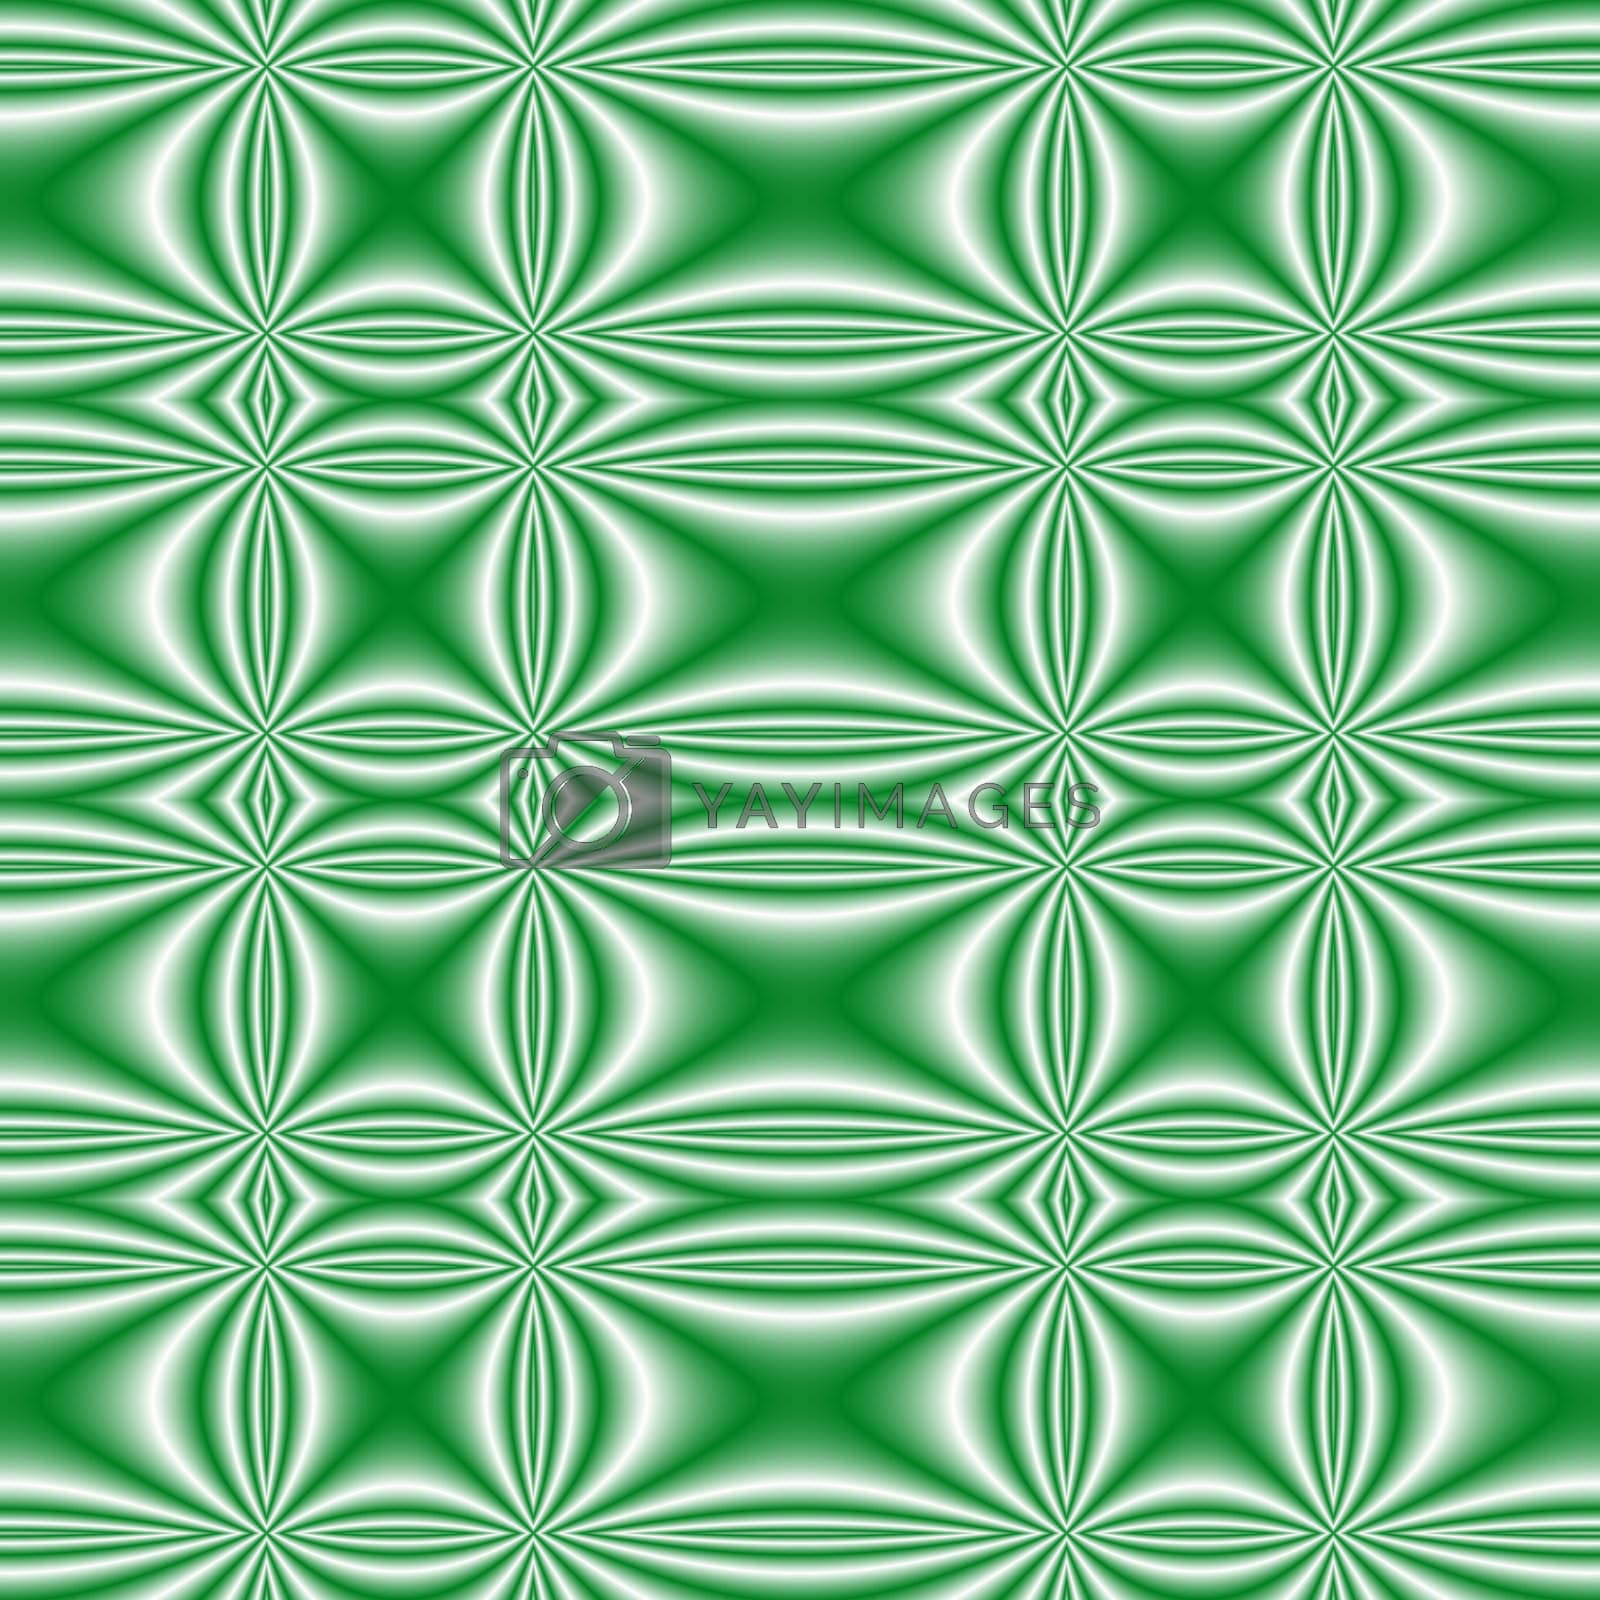 Royalty free image of green swirls 2 by hospitalera